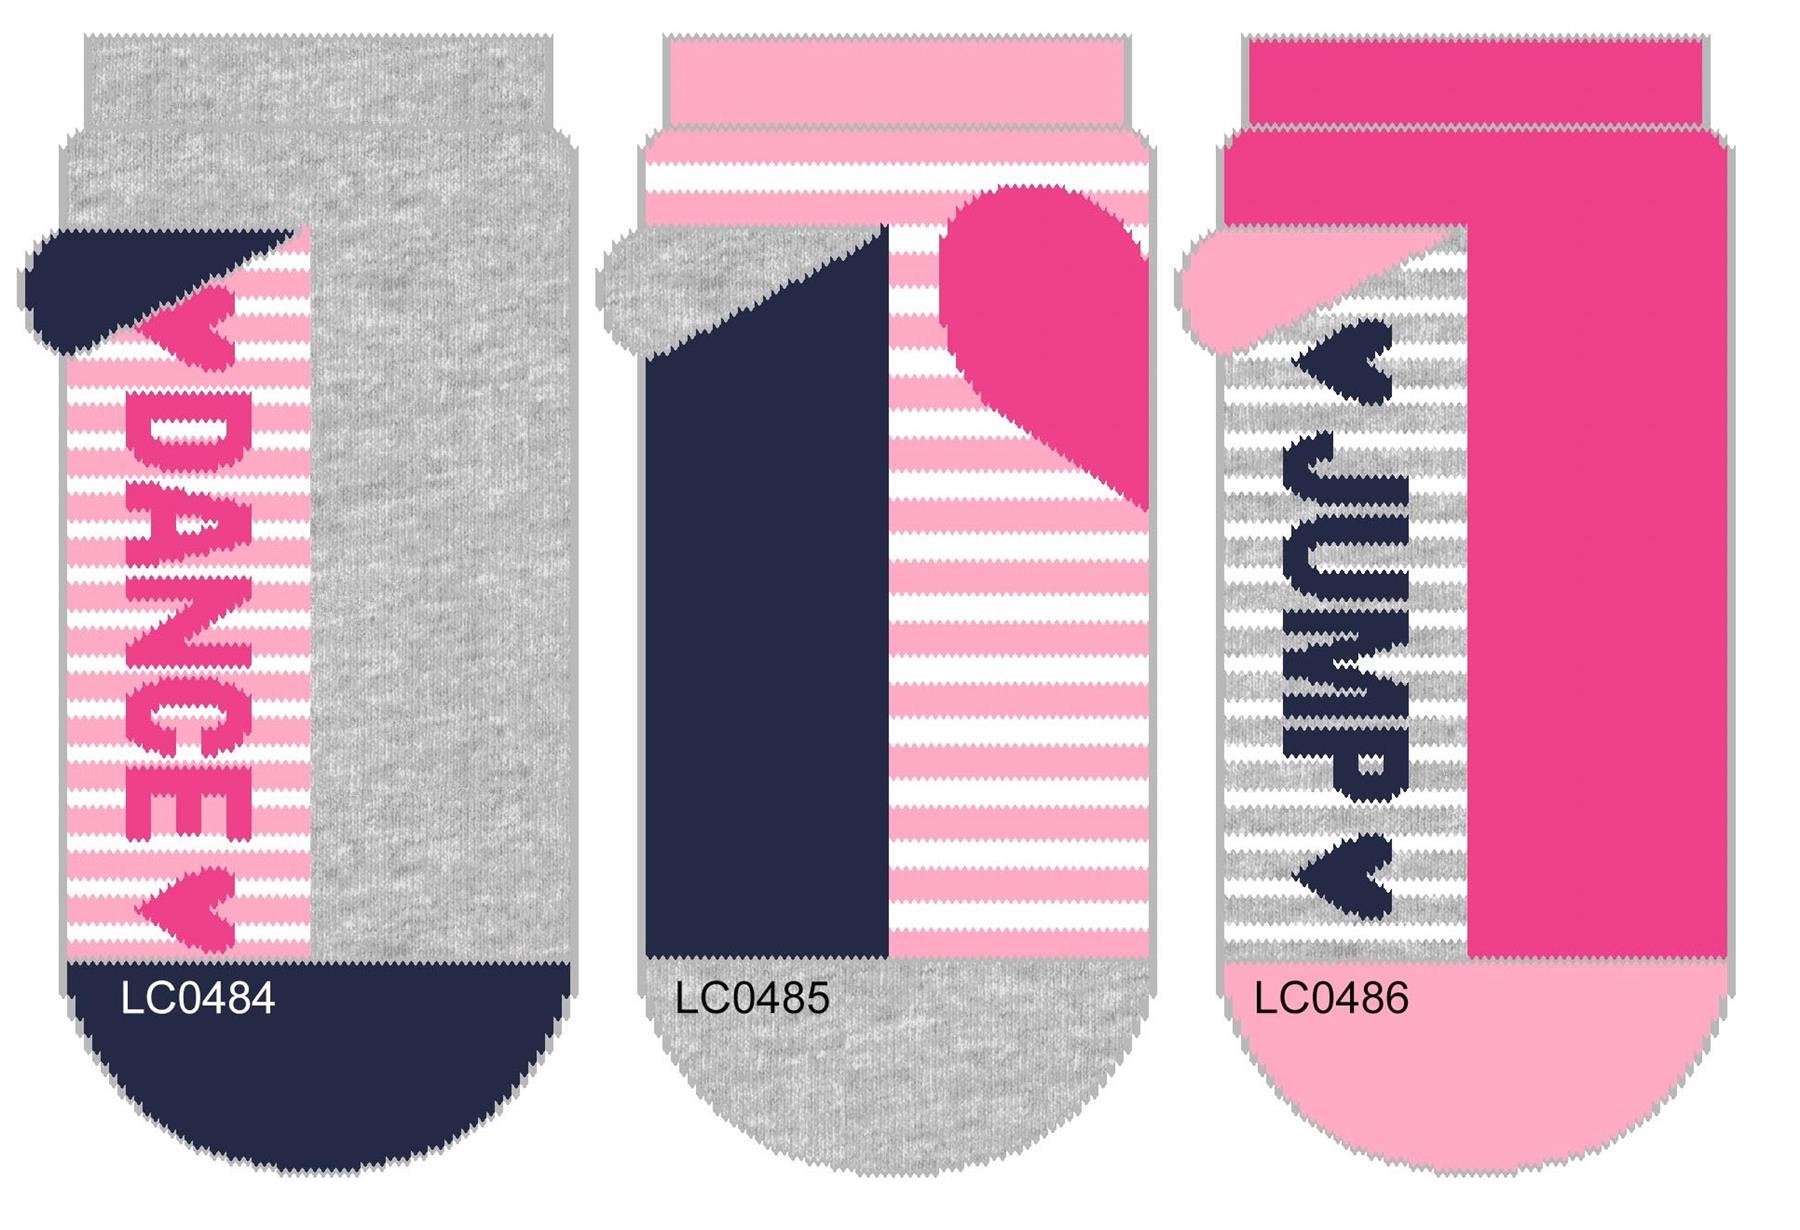 Kids Girls Camo And Leopard Trainer Socks Pack of 3 Kids Footwear Socks 2-10 Yr